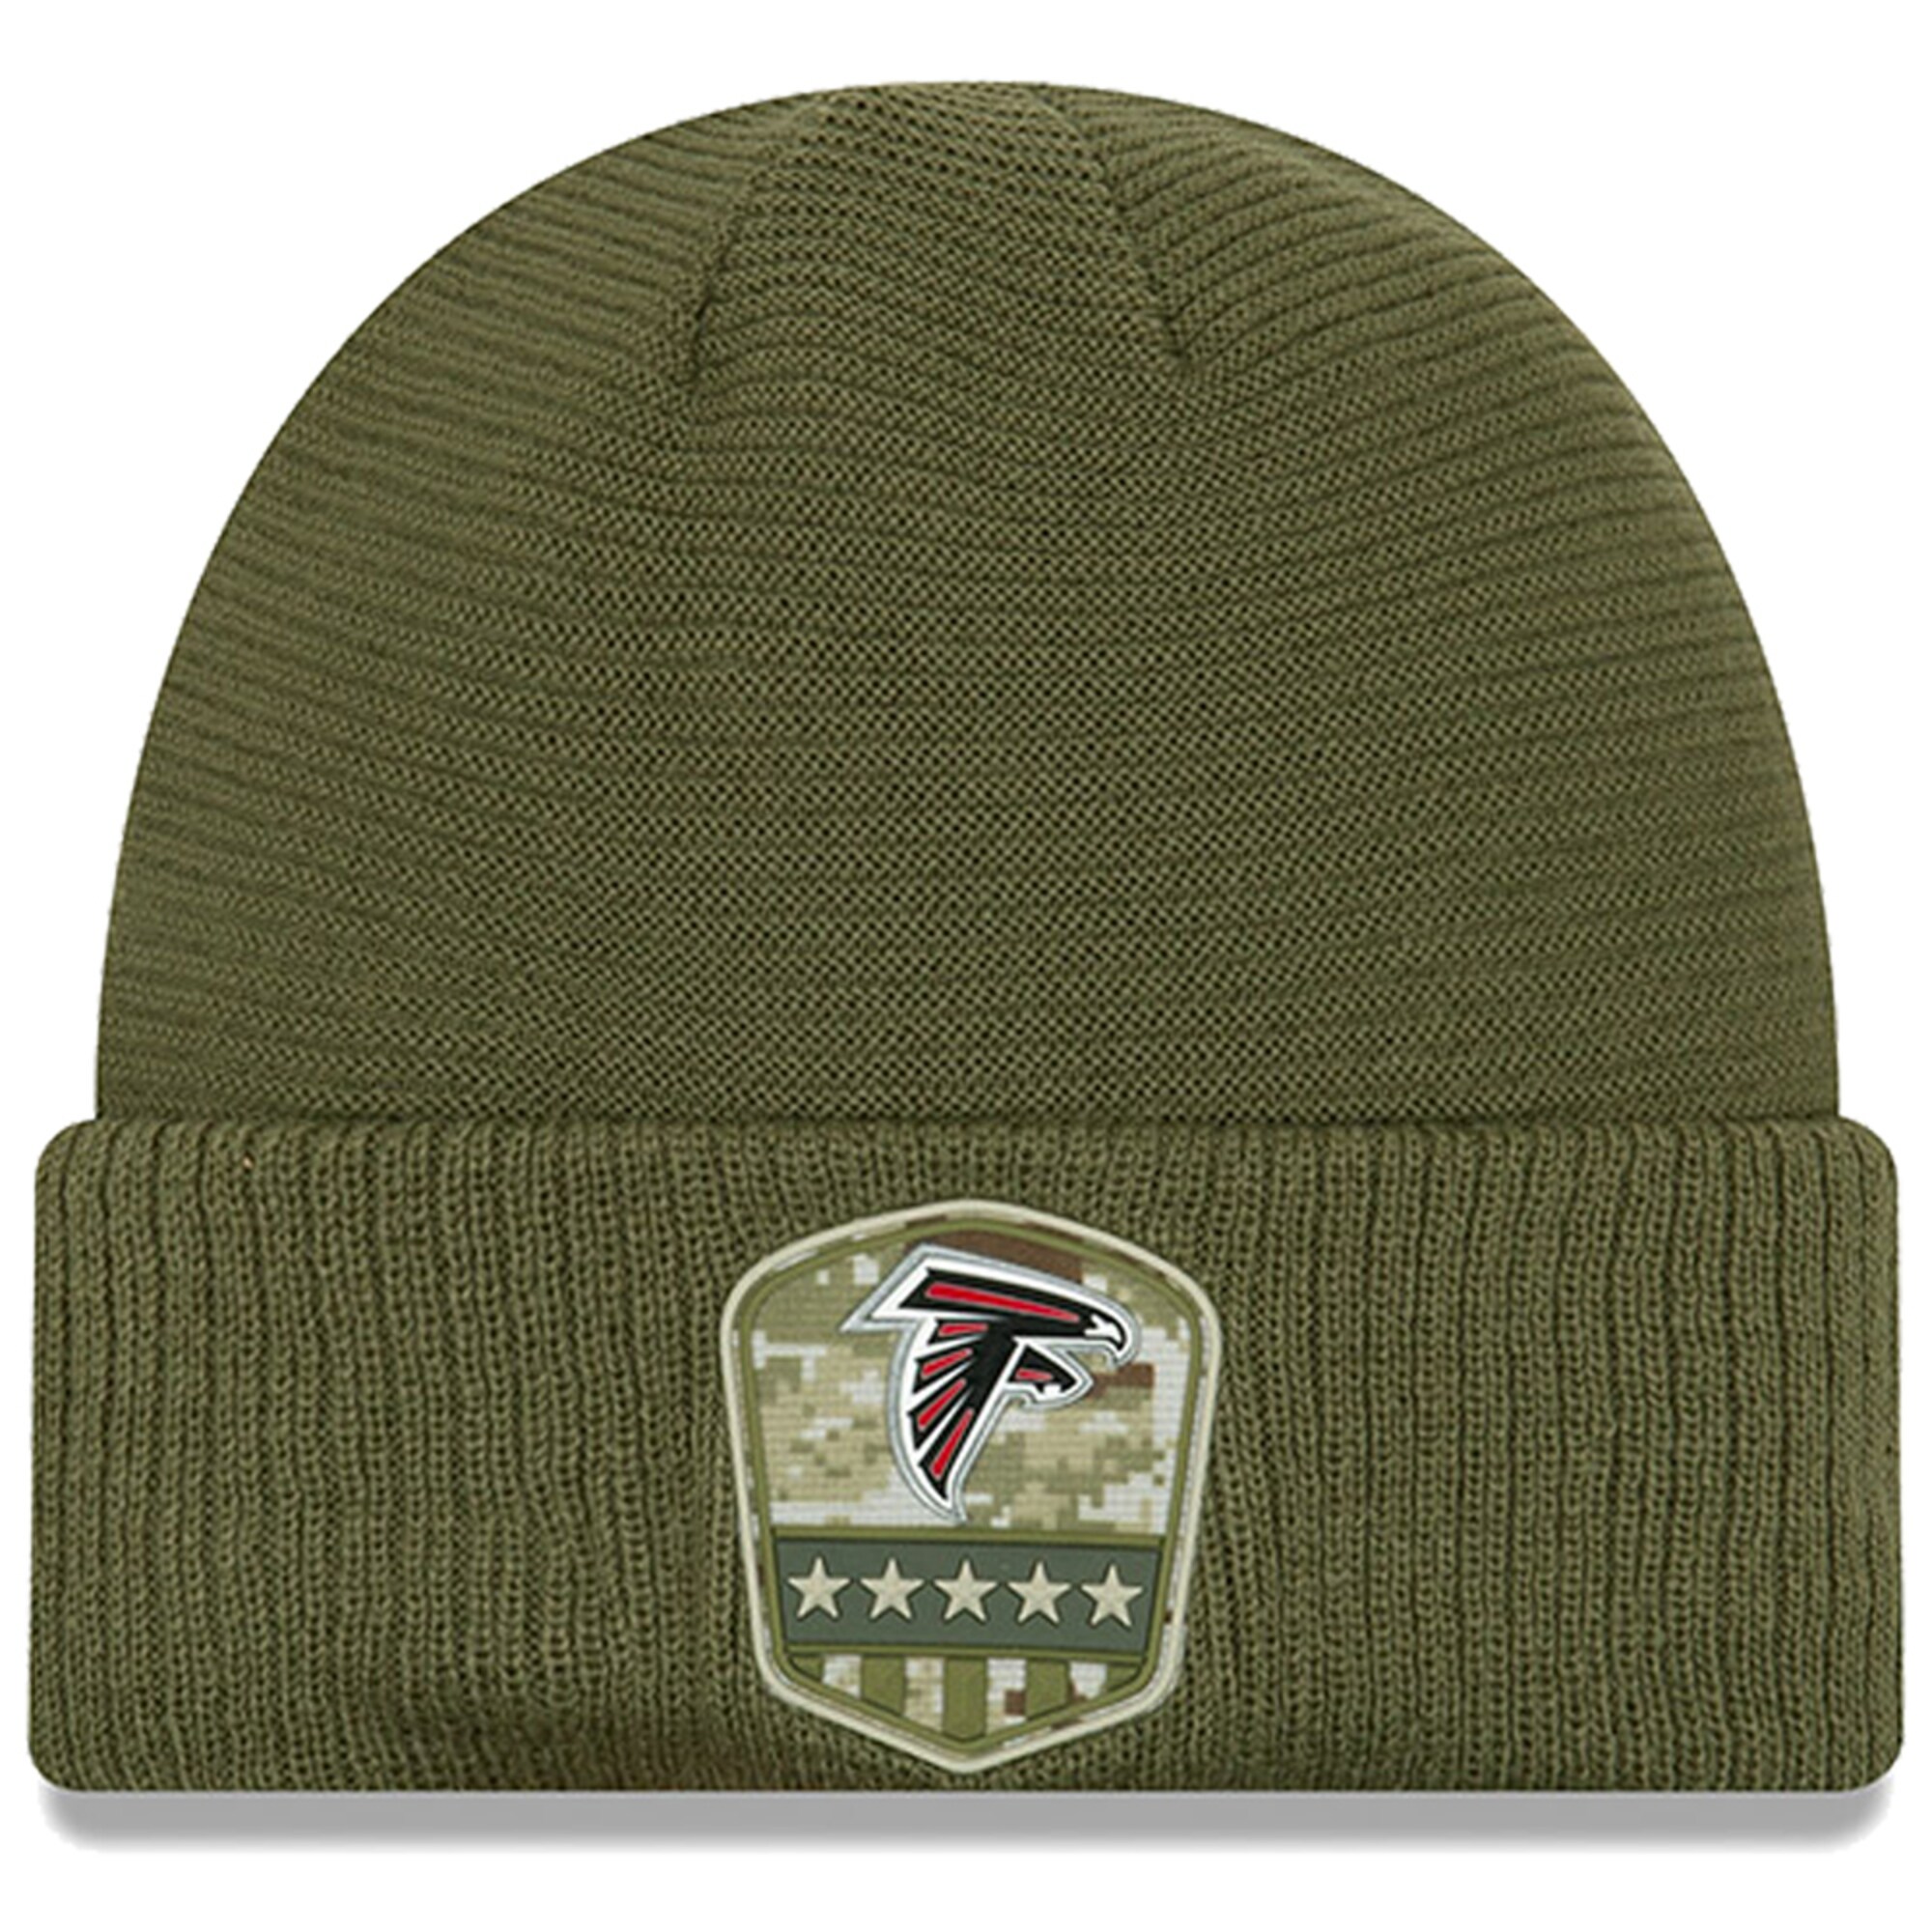 New Era NFL Atlanta Falcons Salute to Service Knit Beanie Hat Cap Ski